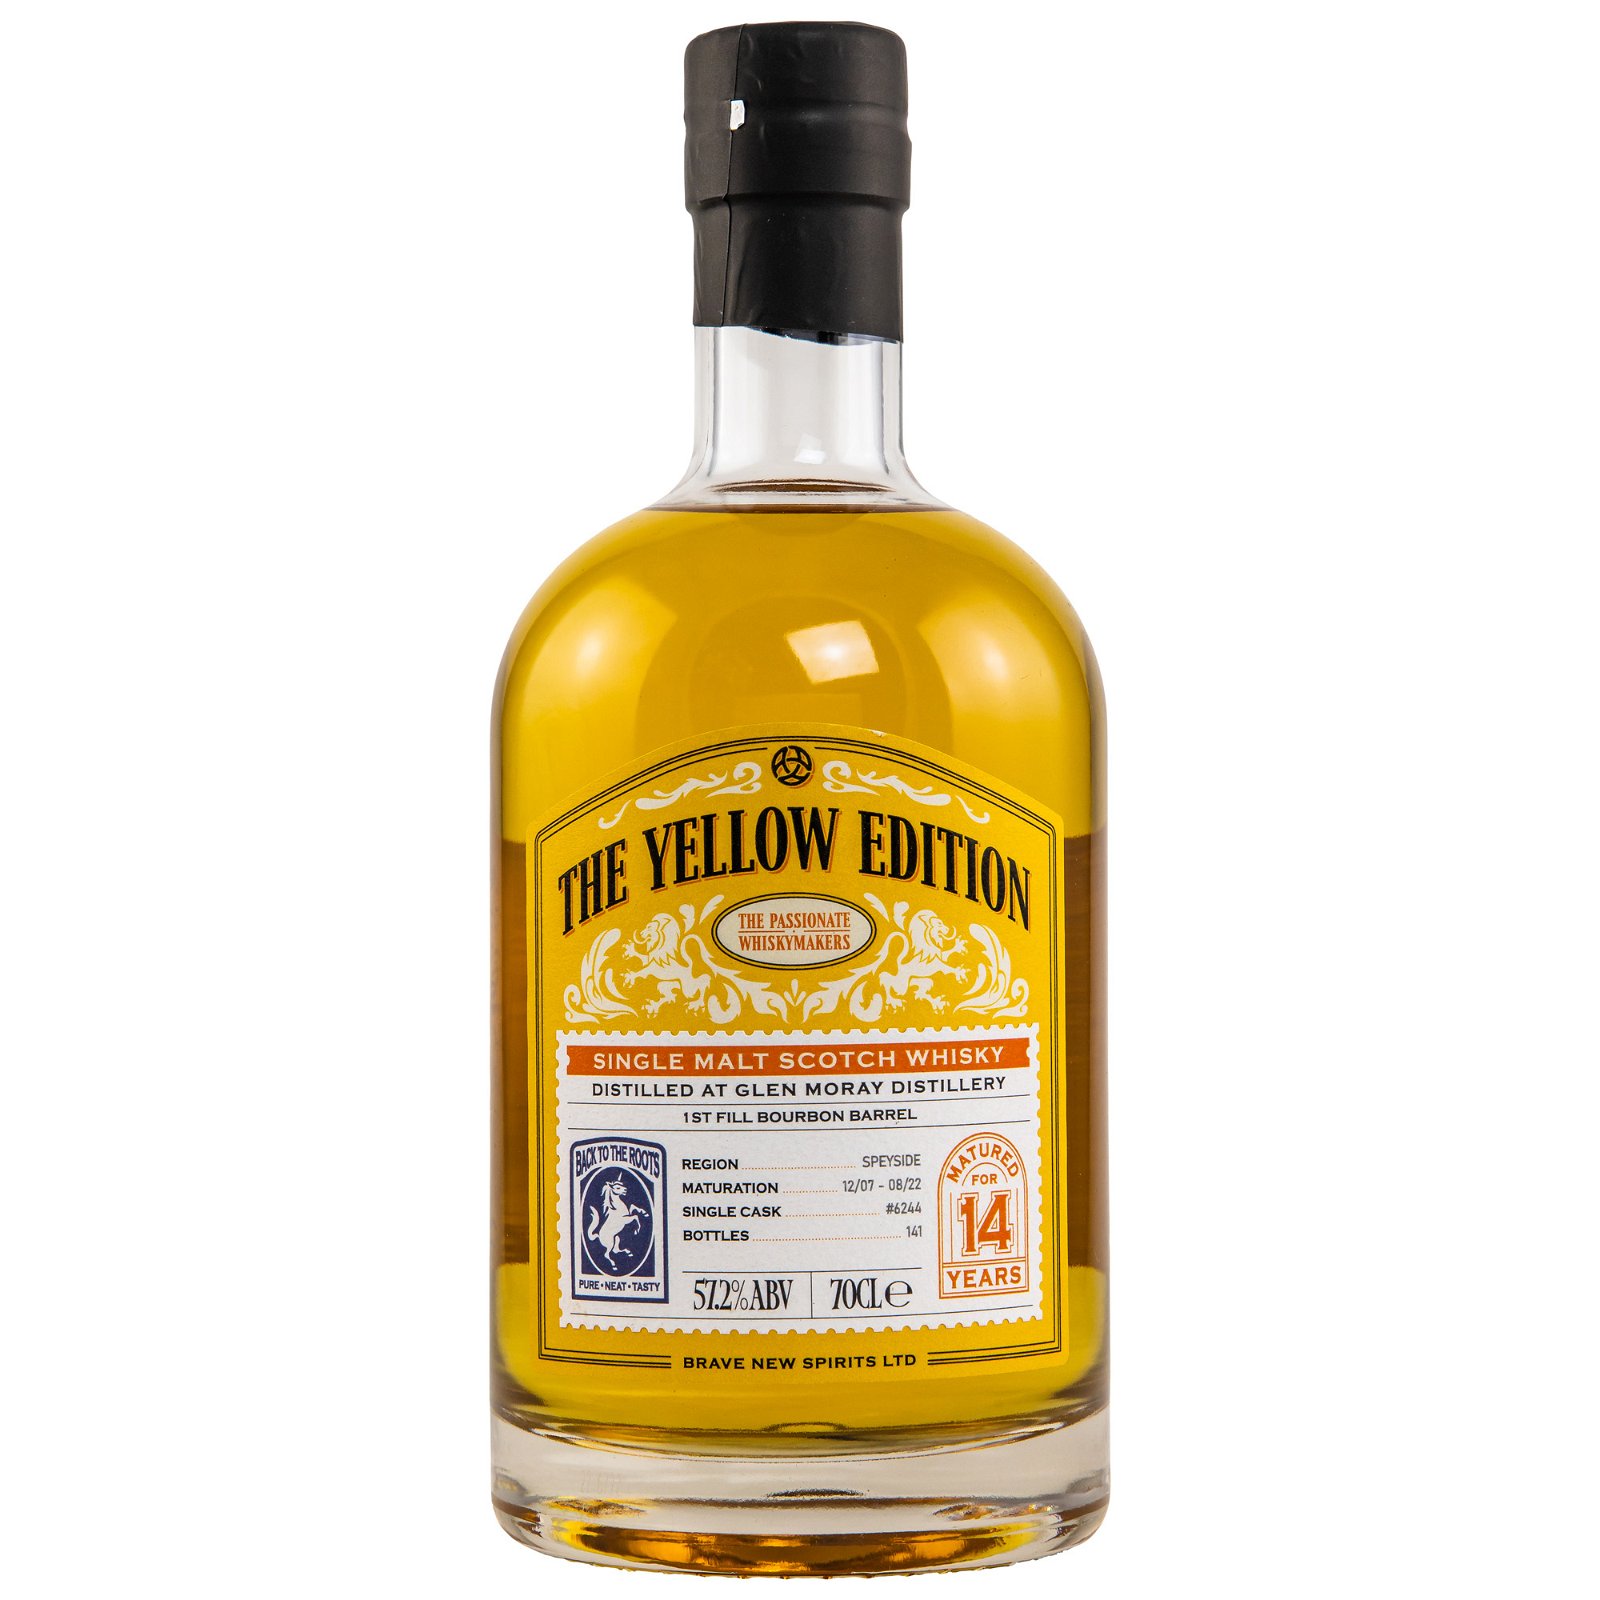 Glen Moray 2007/2022 - 14 Jahre 1st Fill Bourbon Barrel No. 6244 The Yellow Edition (Brave New Spirits)